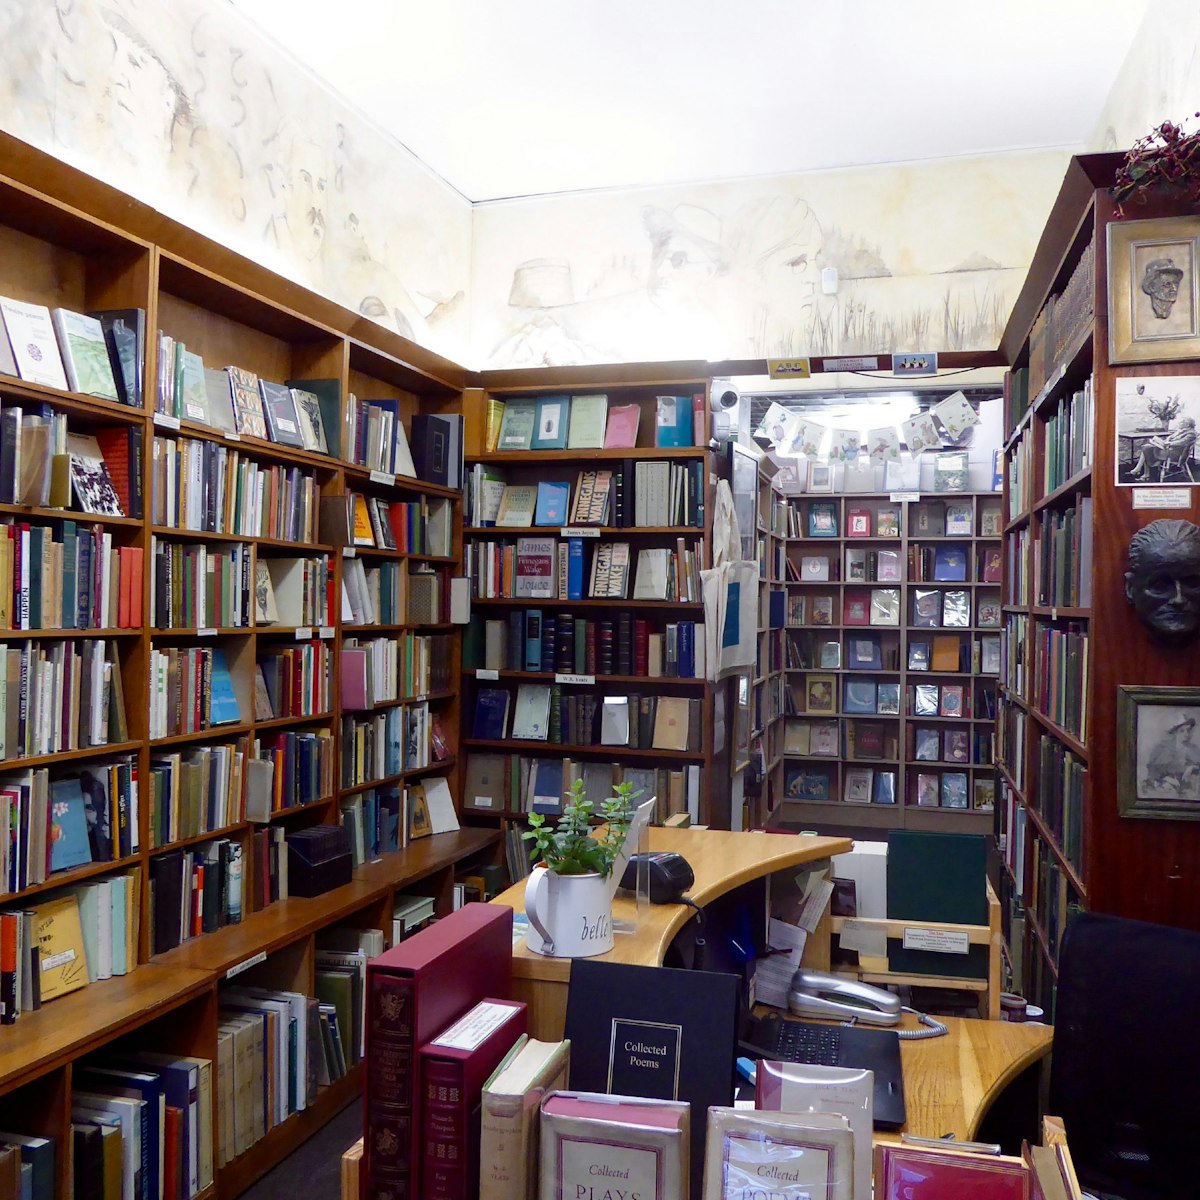 Shelves of rare books, including James Joyce's death mask in the corner